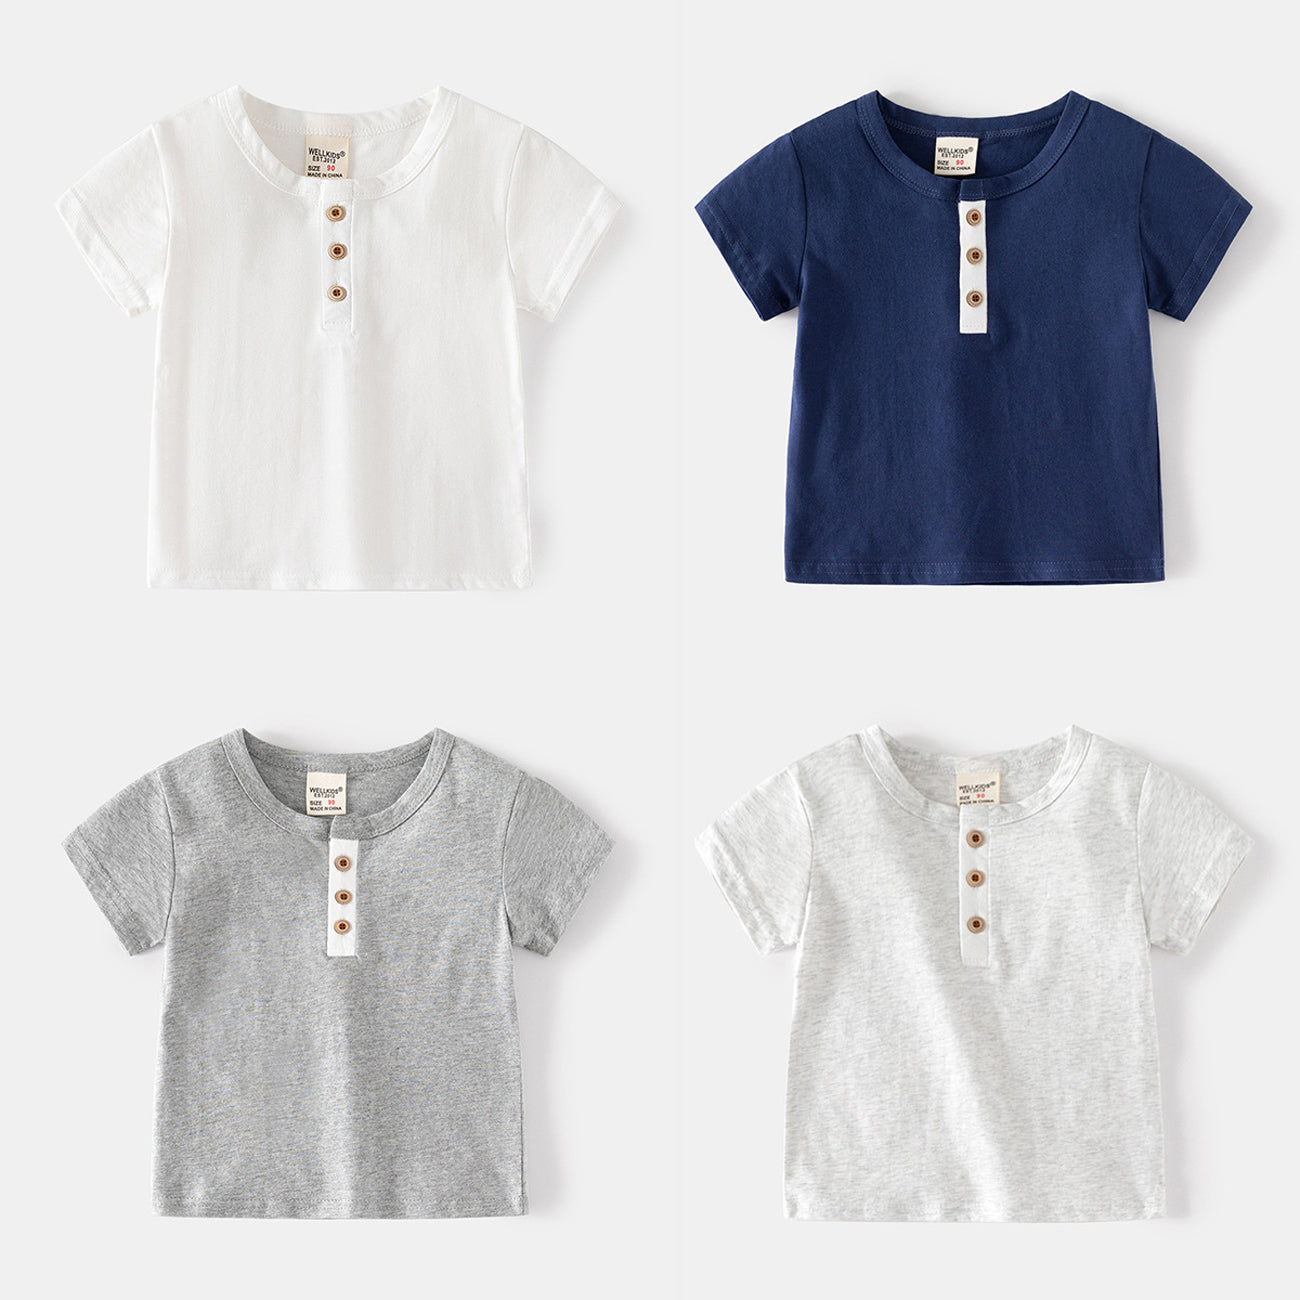 [5131021] - Baju Atasan Kaos Kancing Fashion Import Anak Laki-Laki - Motif Small Texture